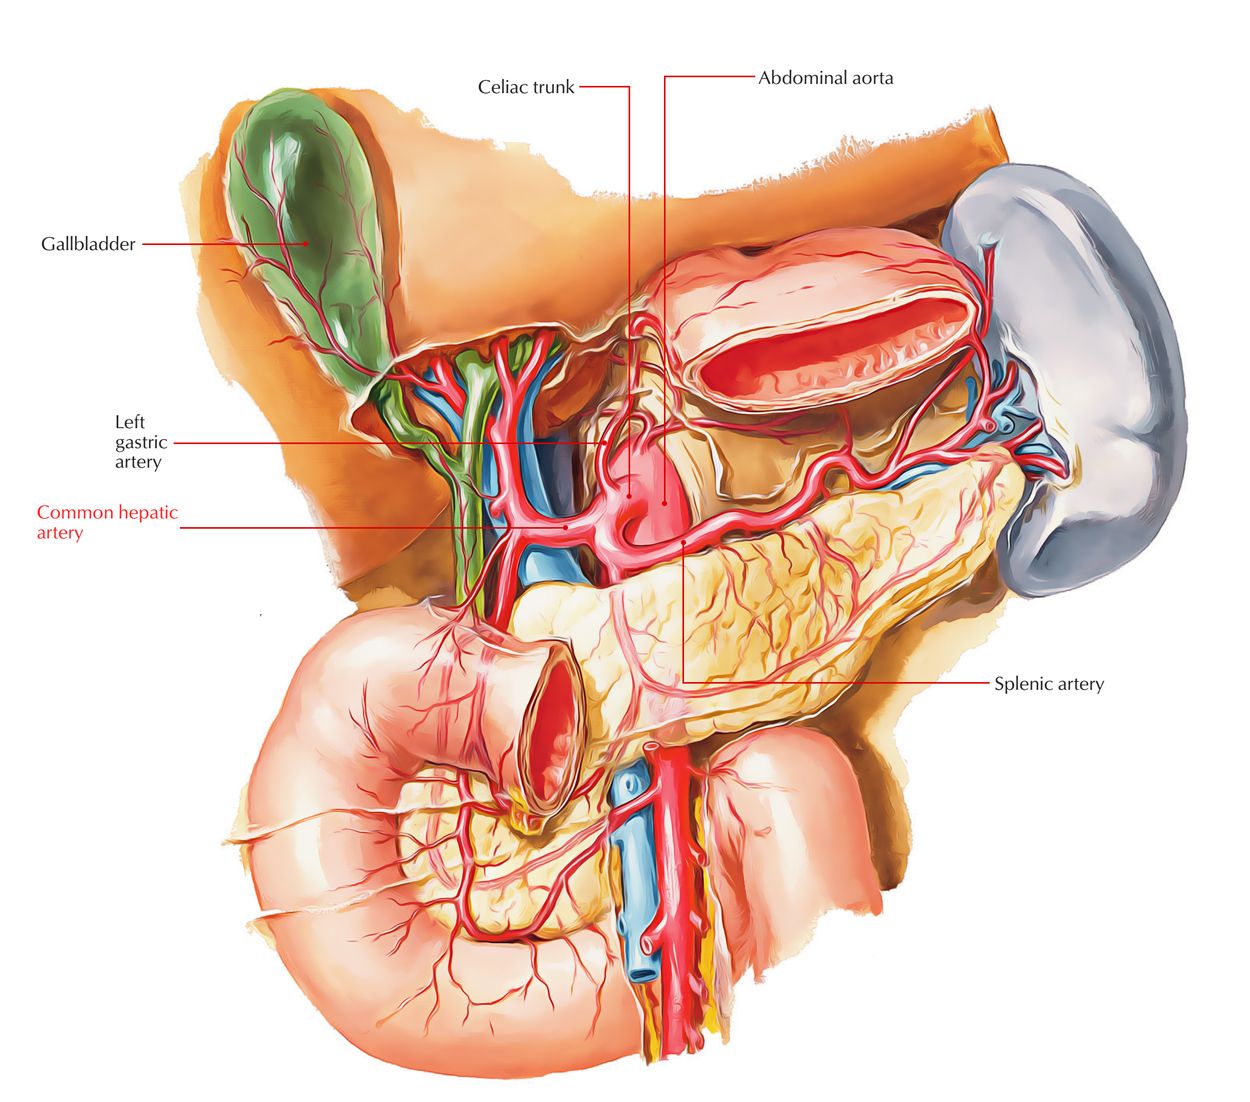 Common Hepatic Artery